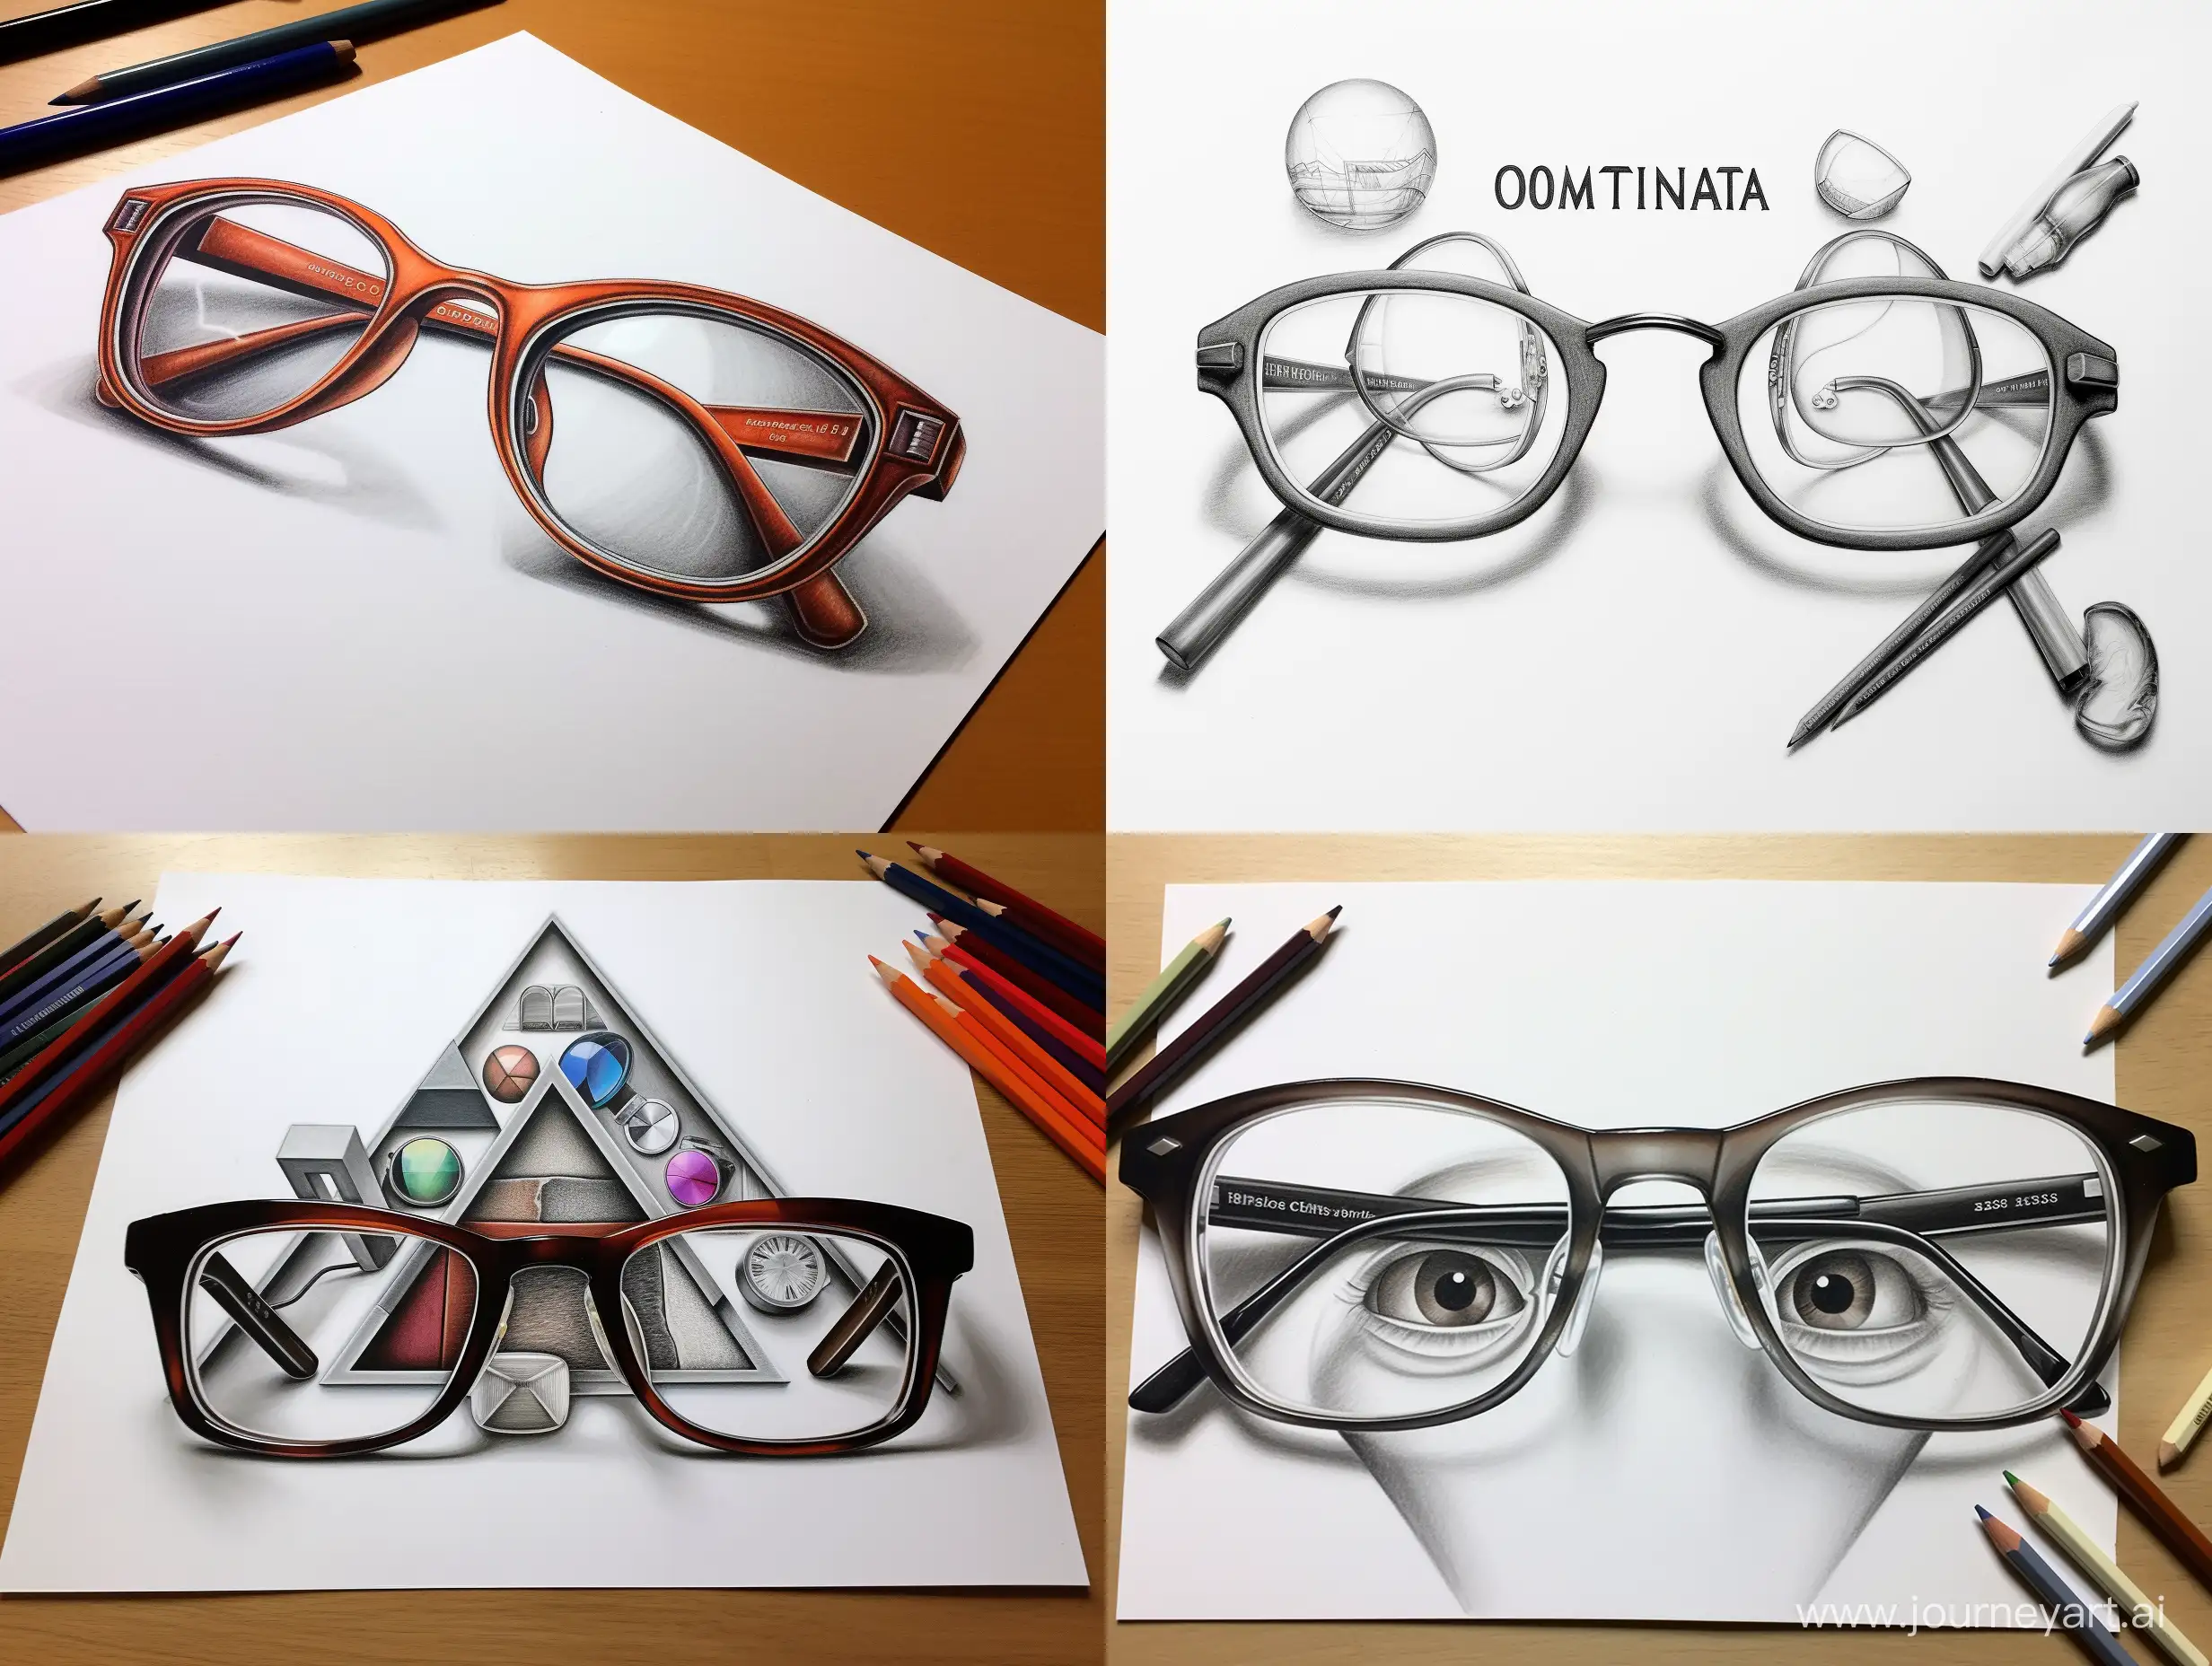 Variations-of-Optics-Ghomata-Depicted-Through-Diverse-Glasses-Shapes